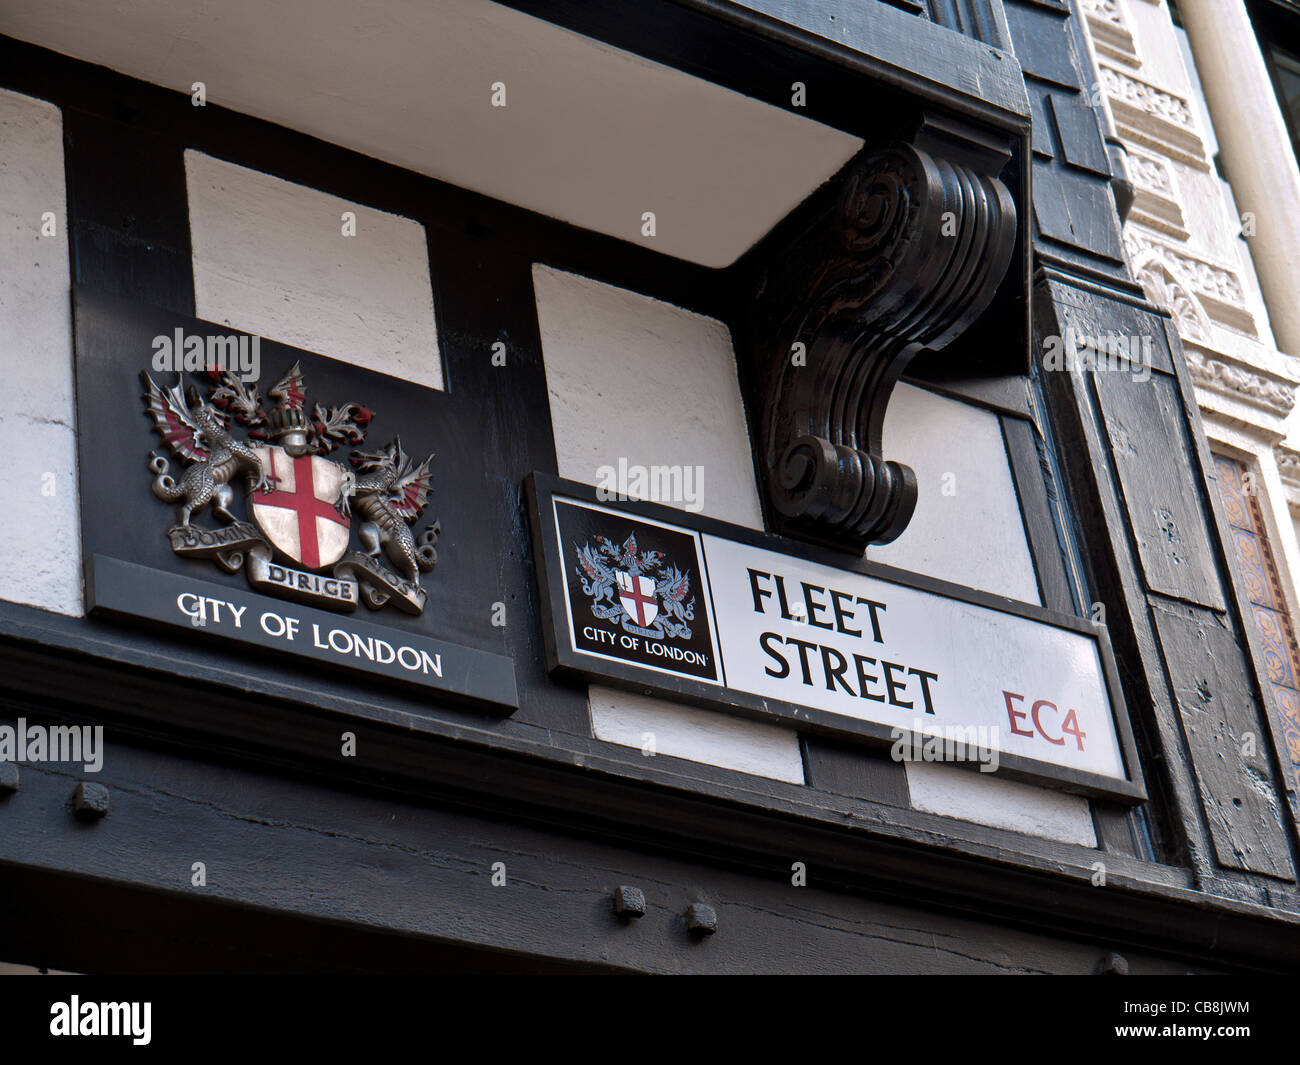 Fleet Street sign and City of London crest London EC4 UK Stock Photo